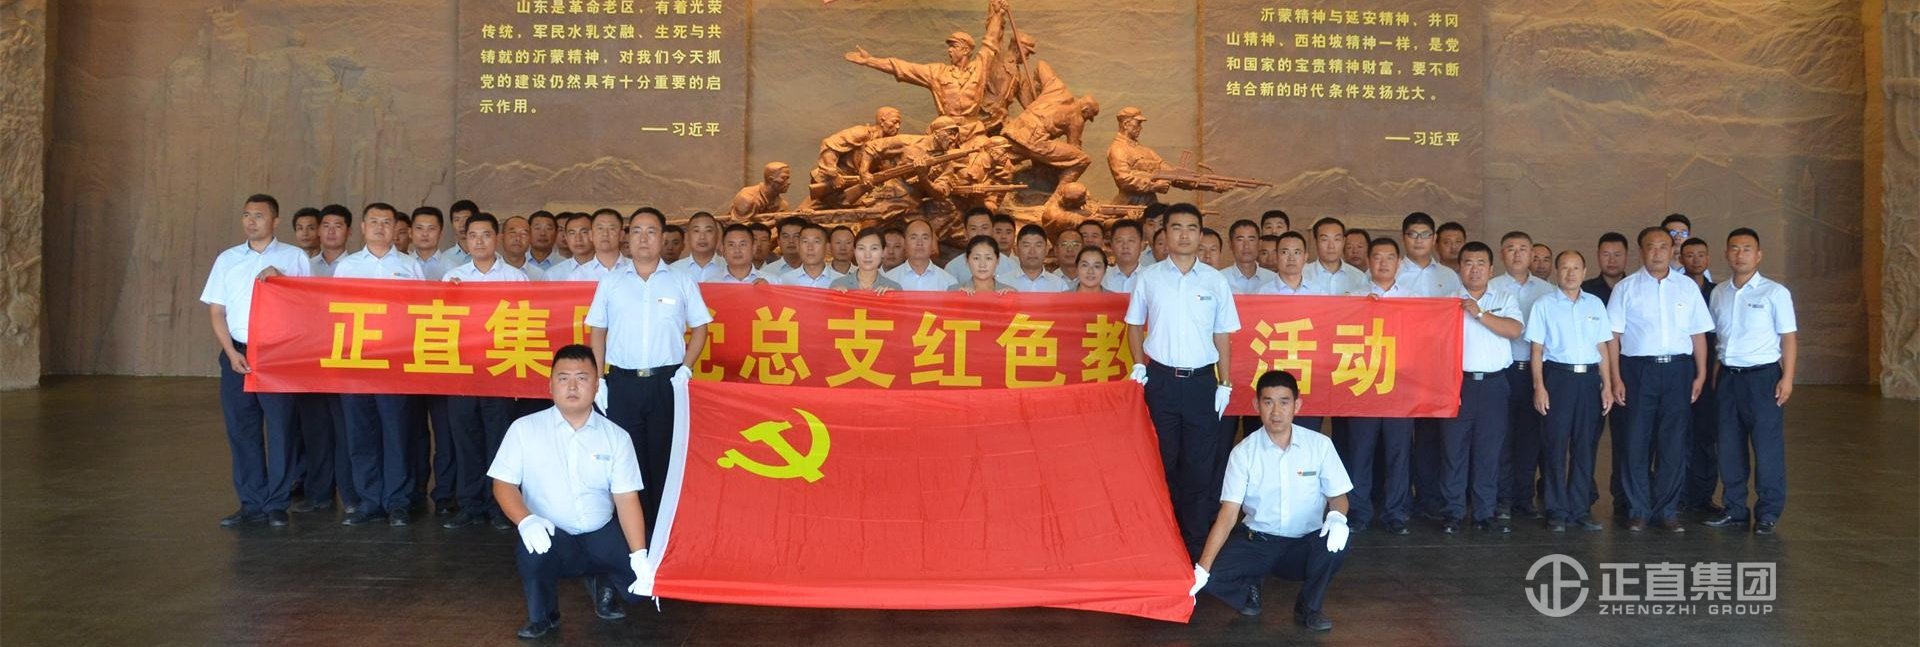 pg电子游戏全体党员赴沂蒙革命纪念馆庆祝中国共产党建设96周年